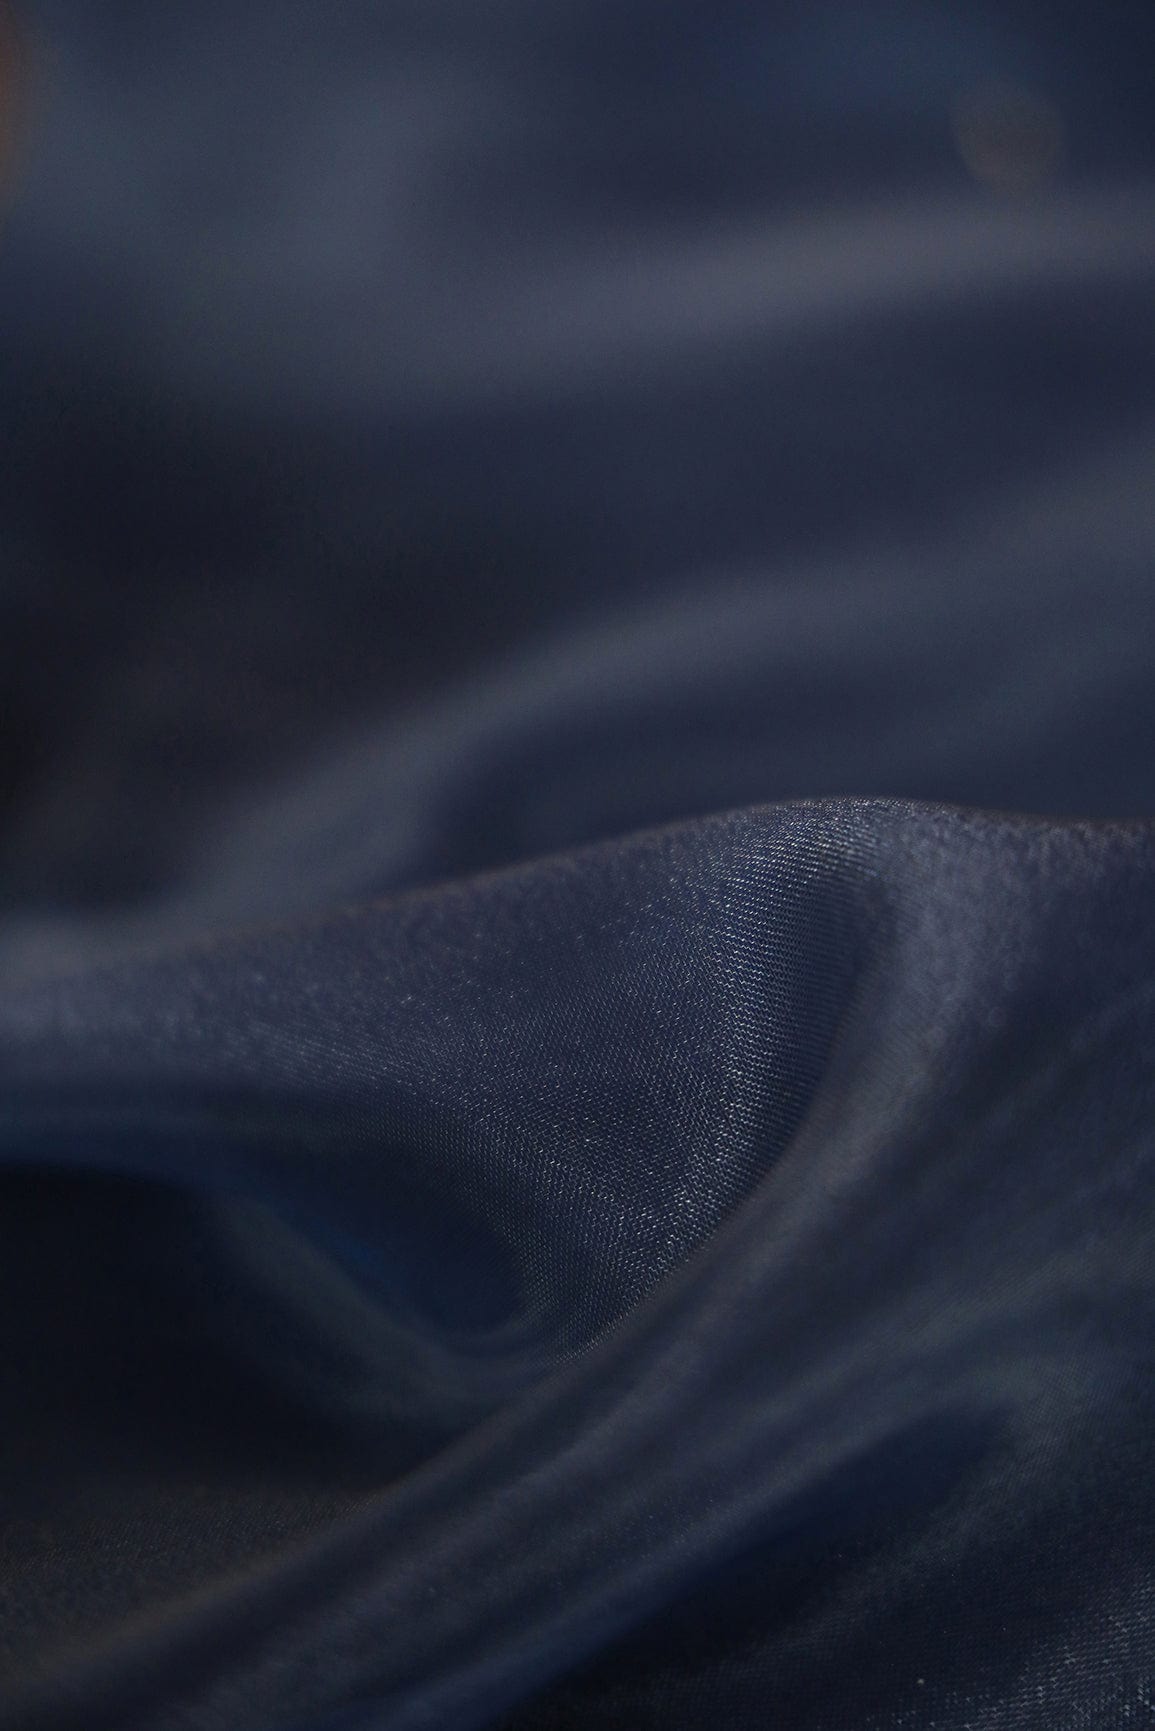 doeraa Plain Dyed Fabrics Navy Blue Dyed Tissue Fabric